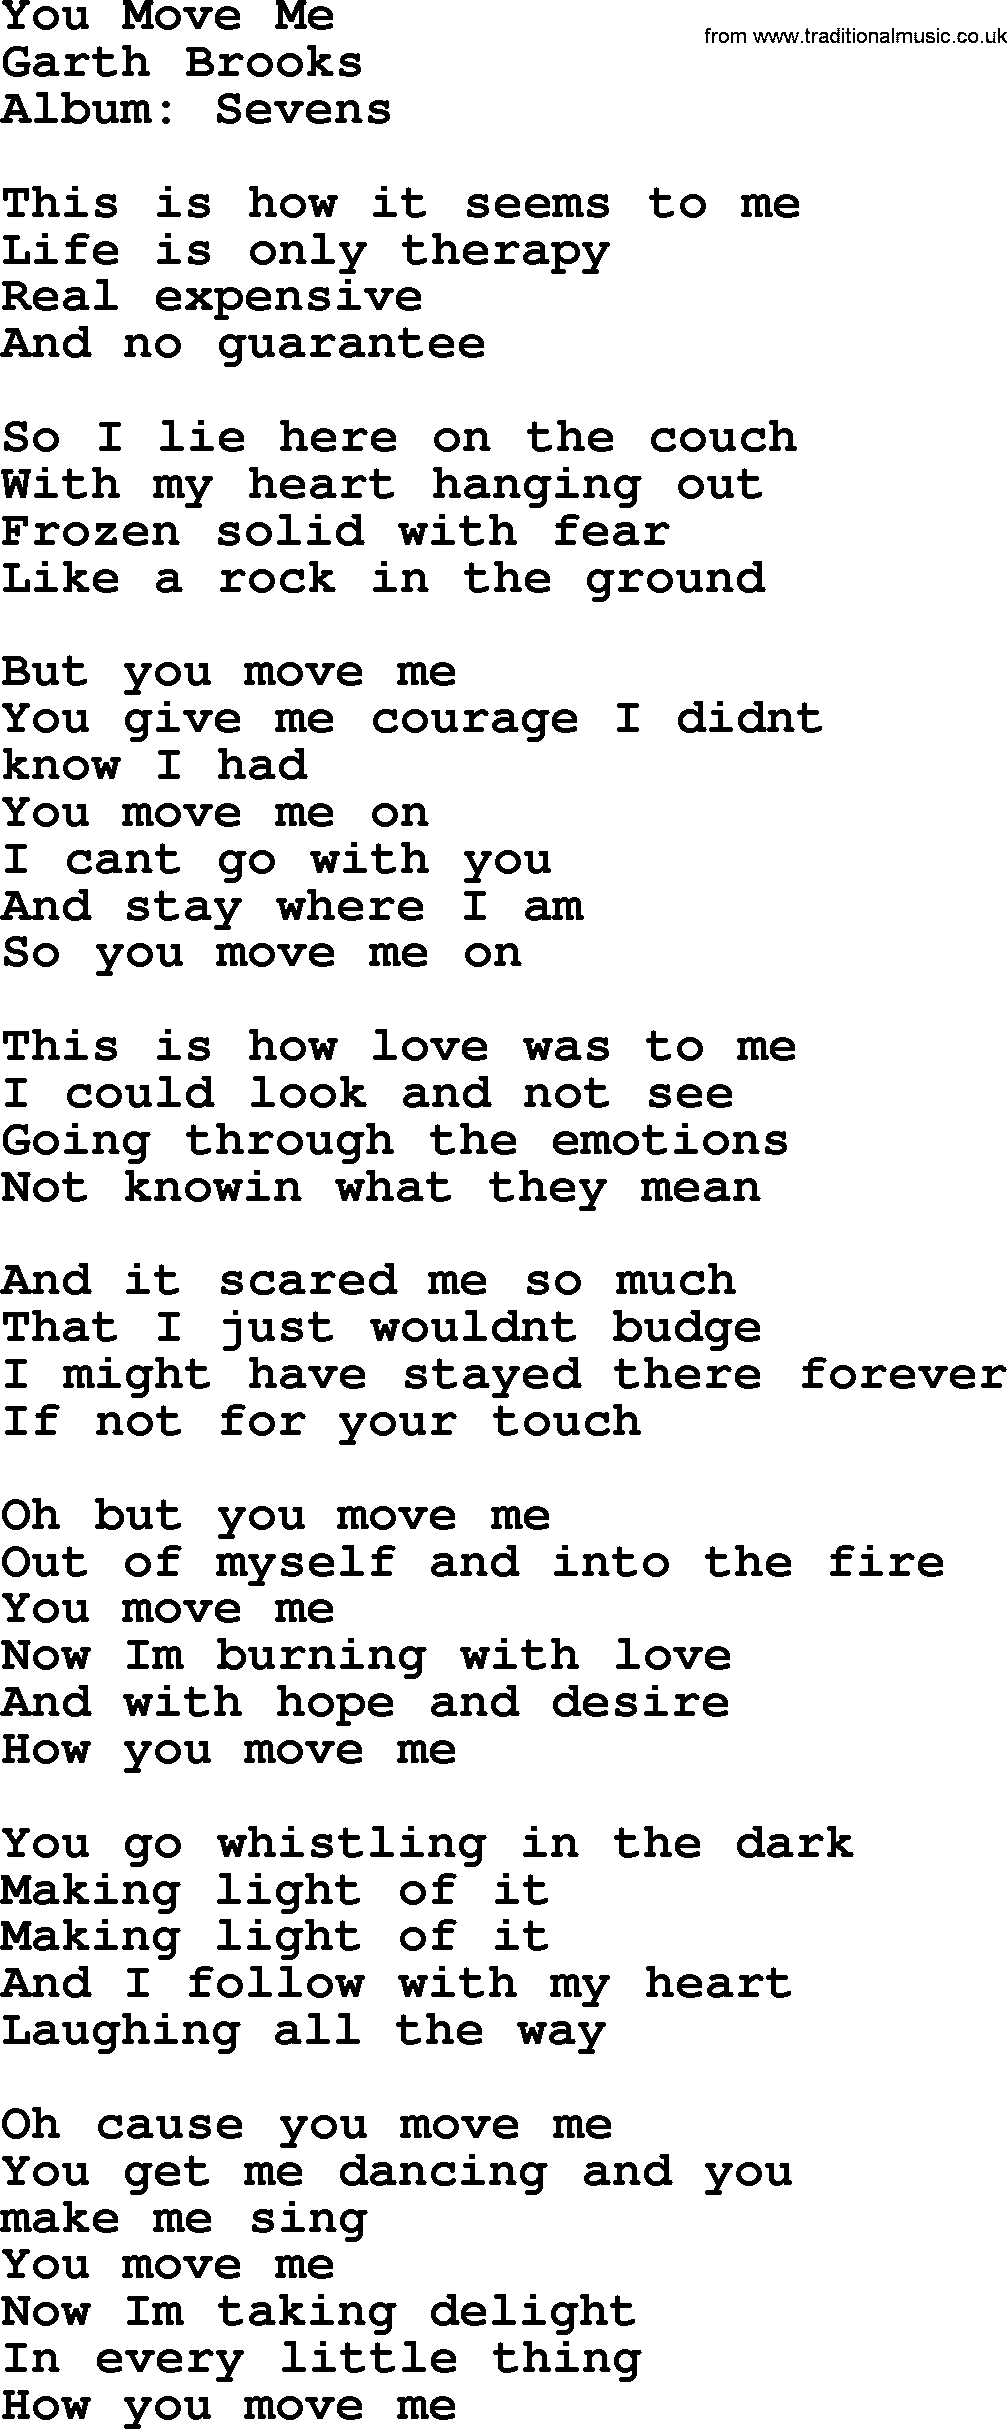 Garth Brooks song: You Move Me, lyrics